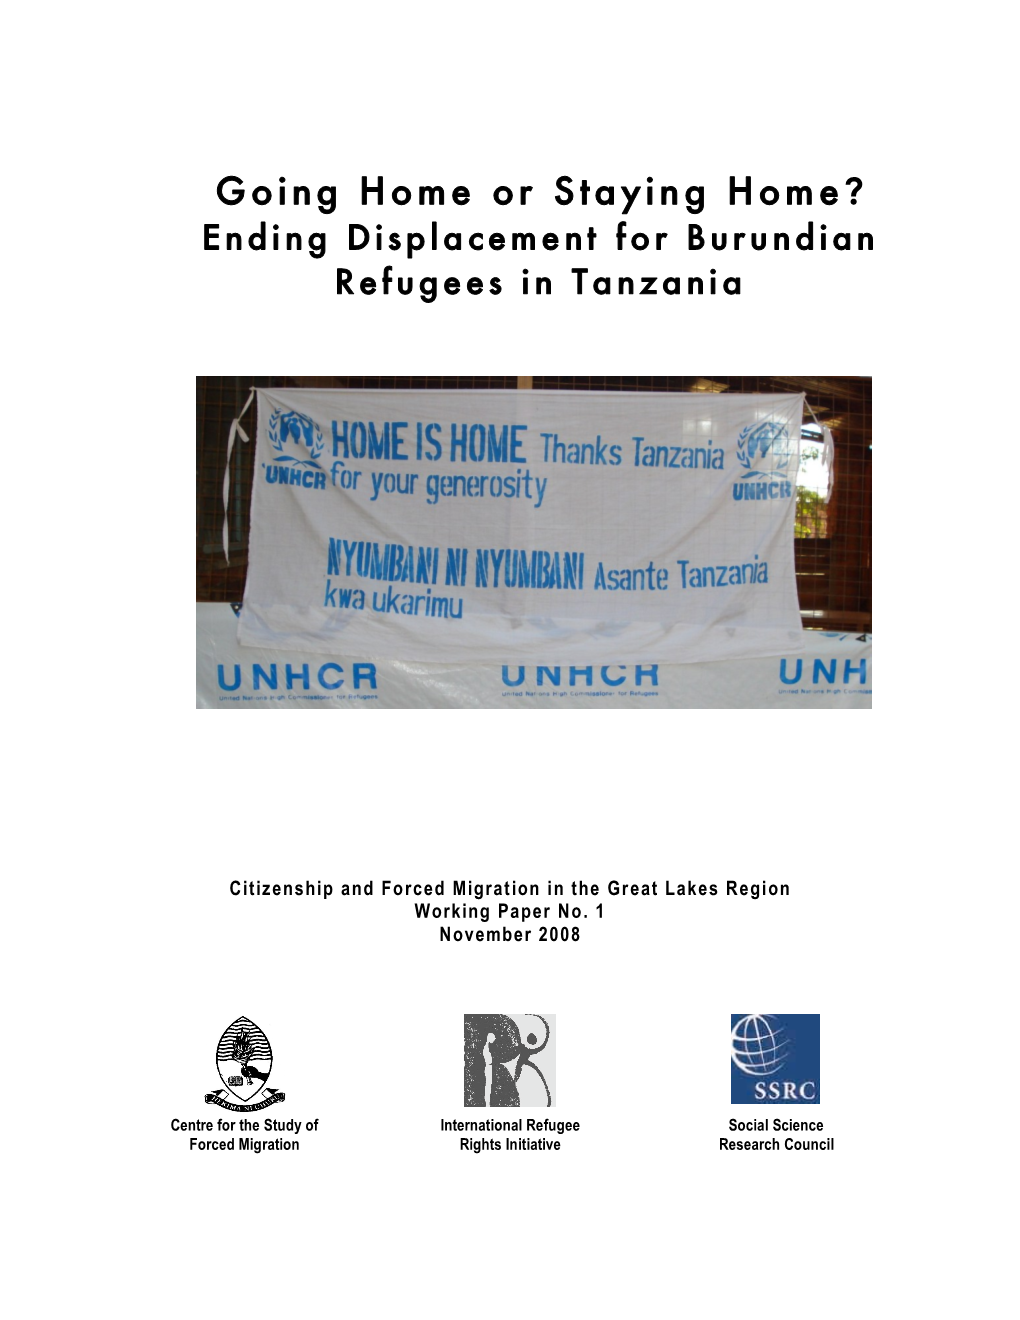 Ending Displacement for Burundian Refugees in Tanzania